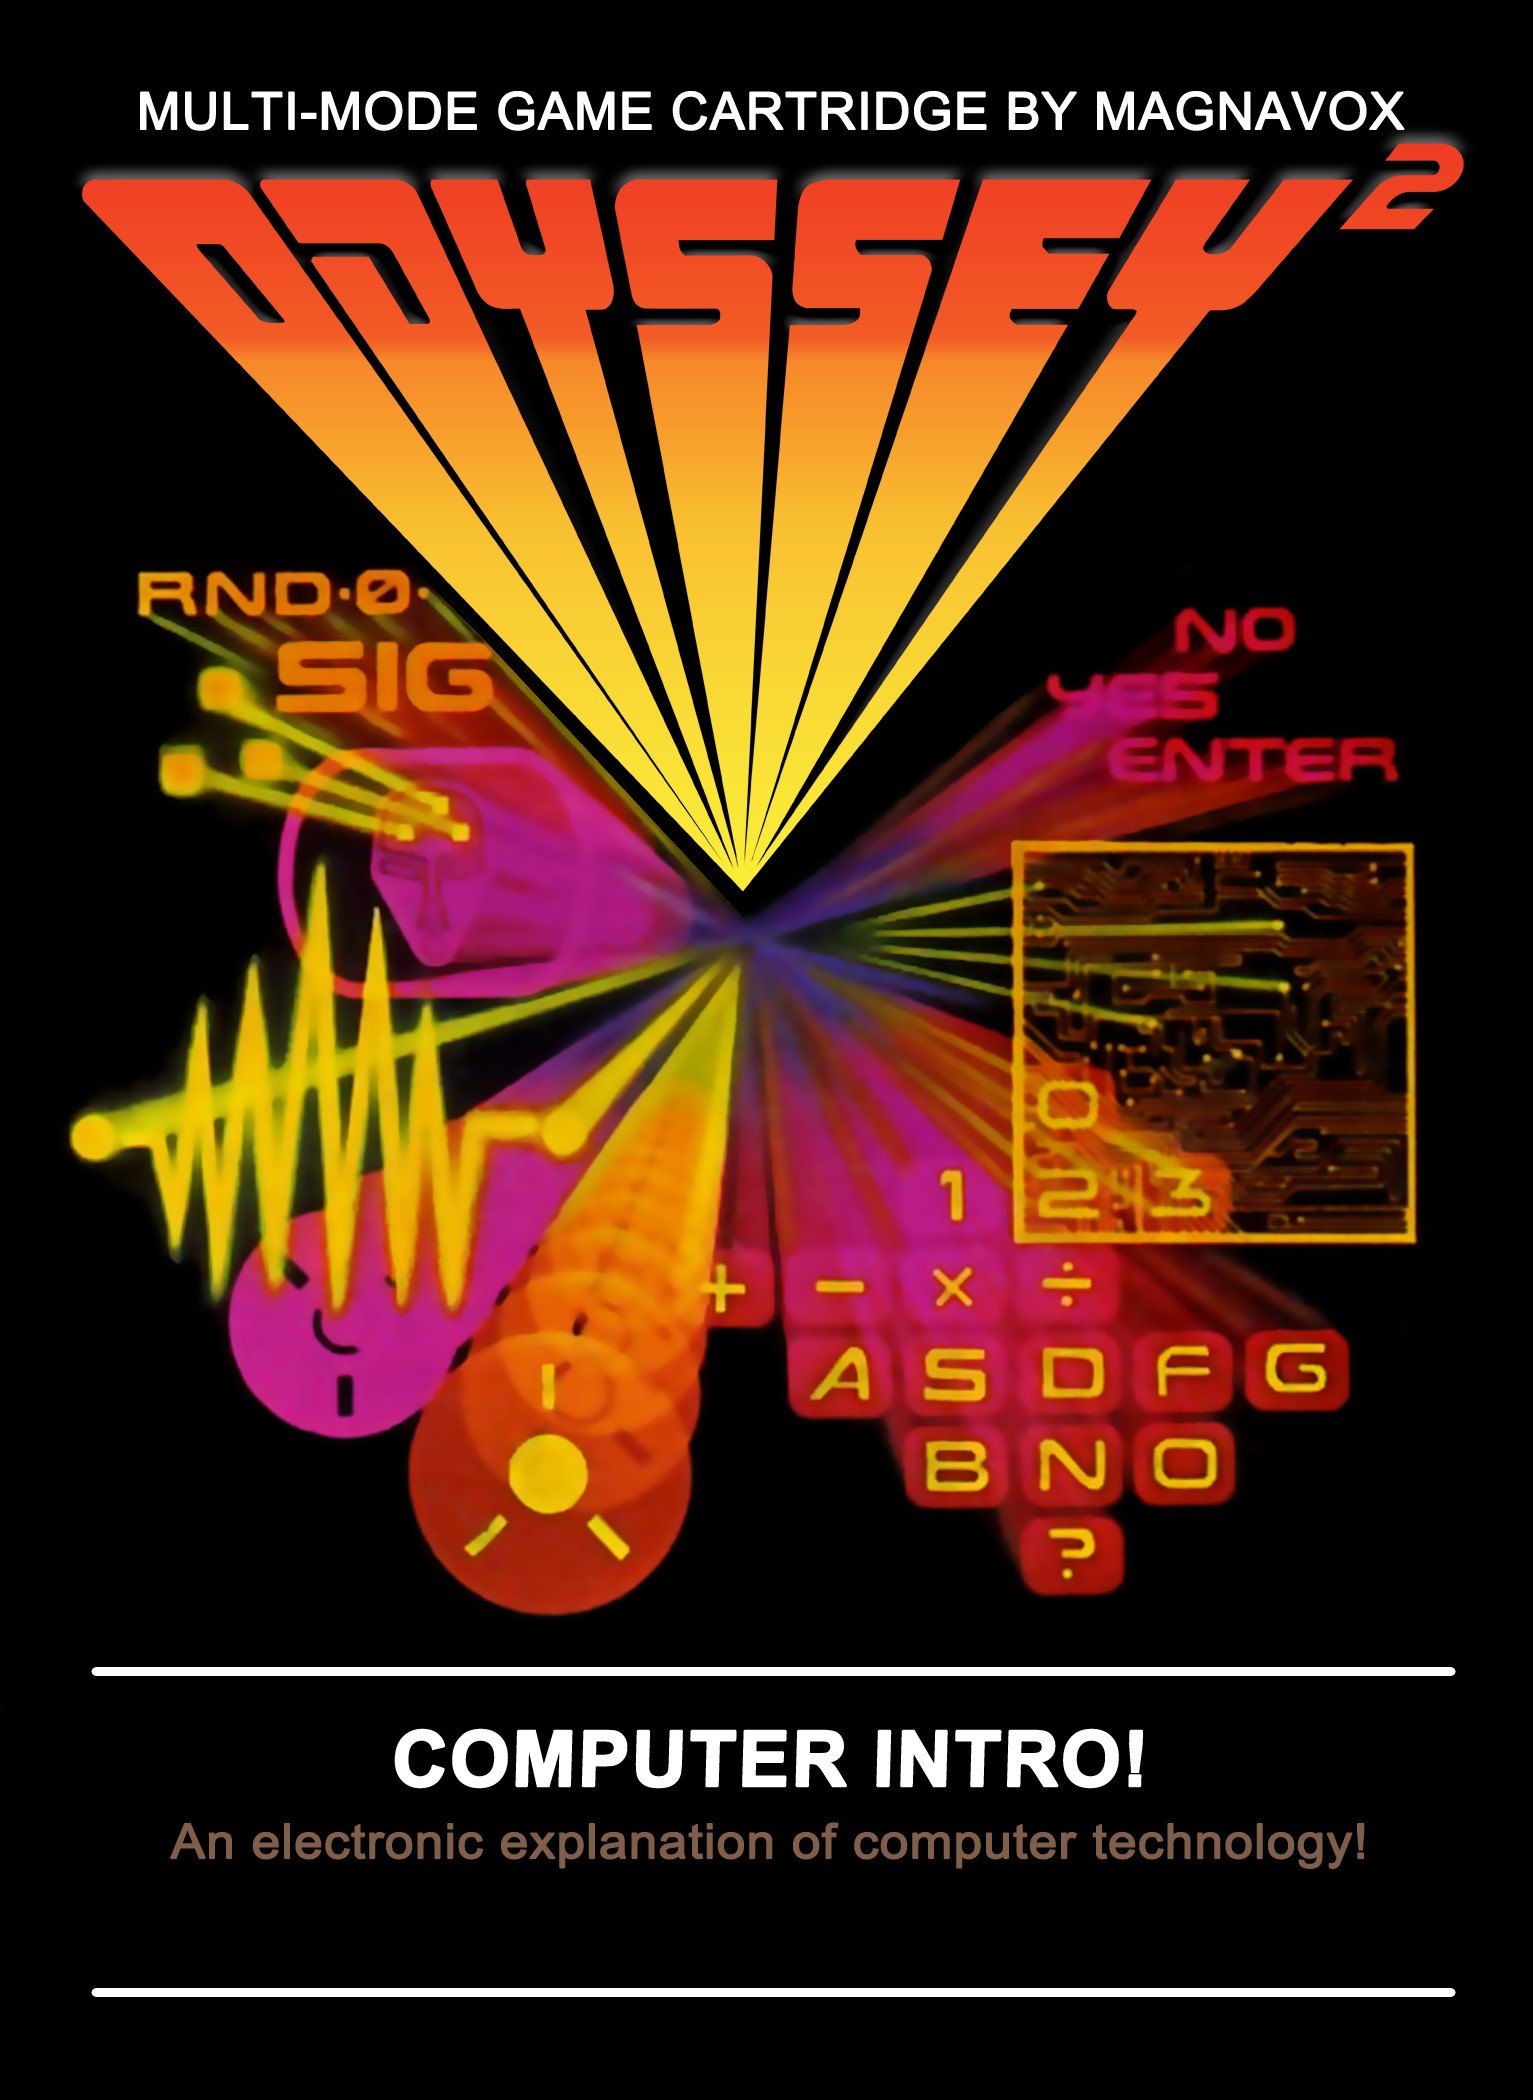 'Computer Intro'